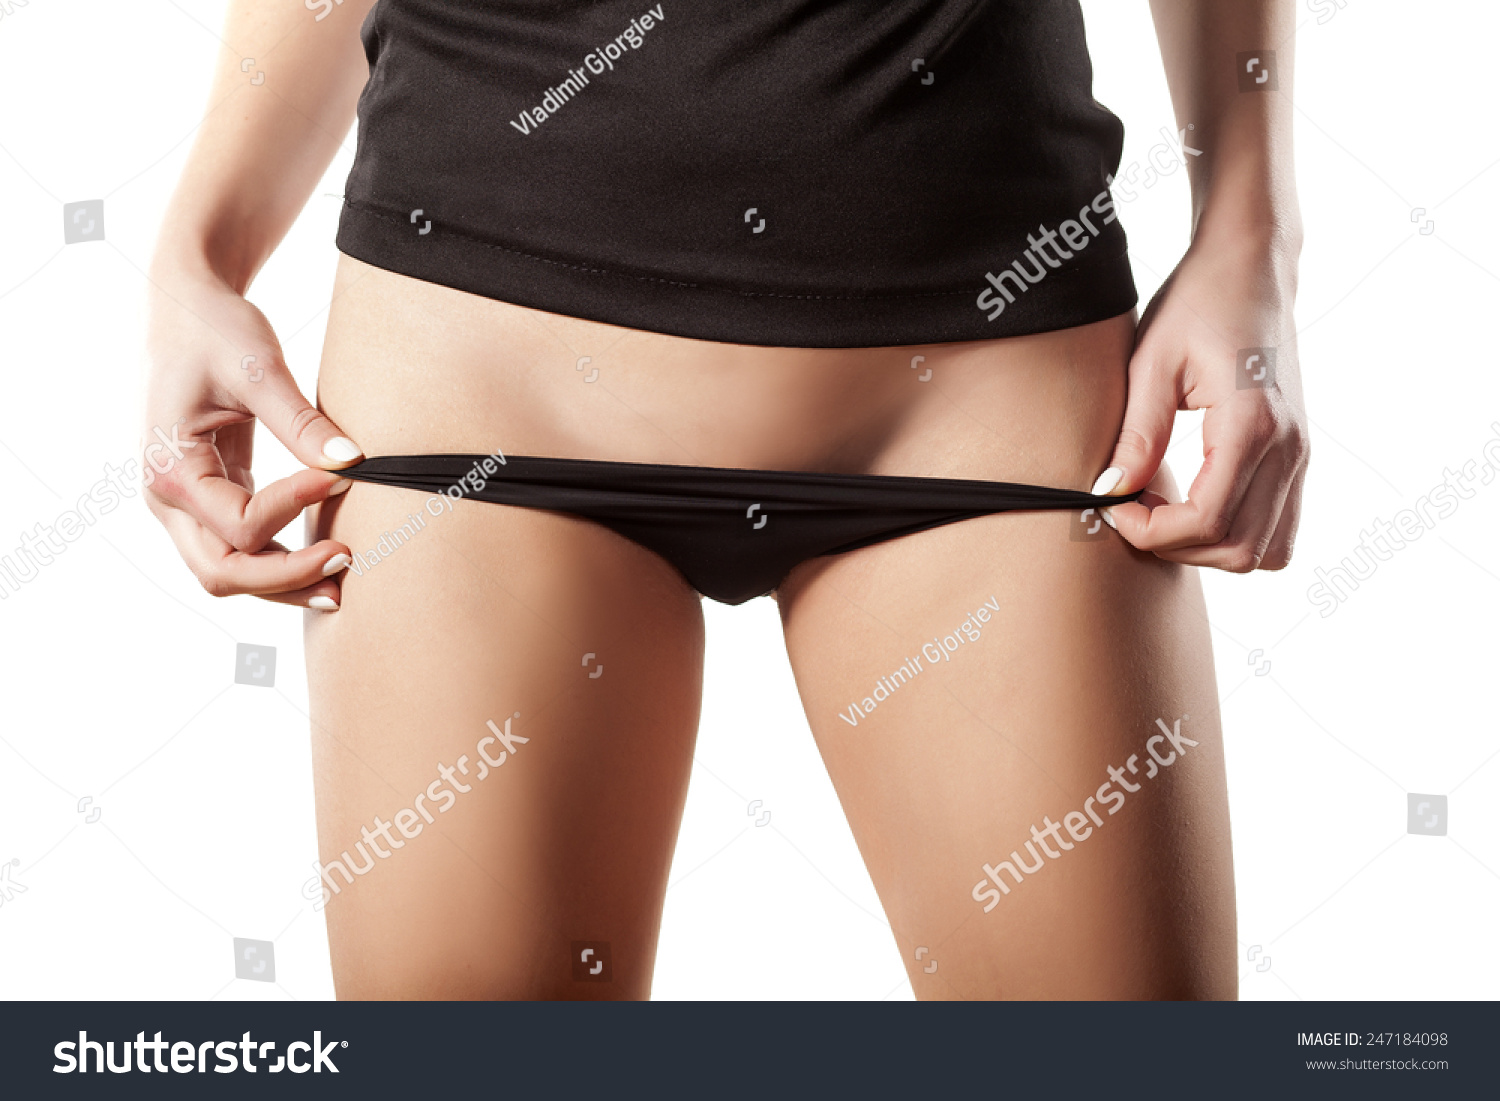 girl shows her panties